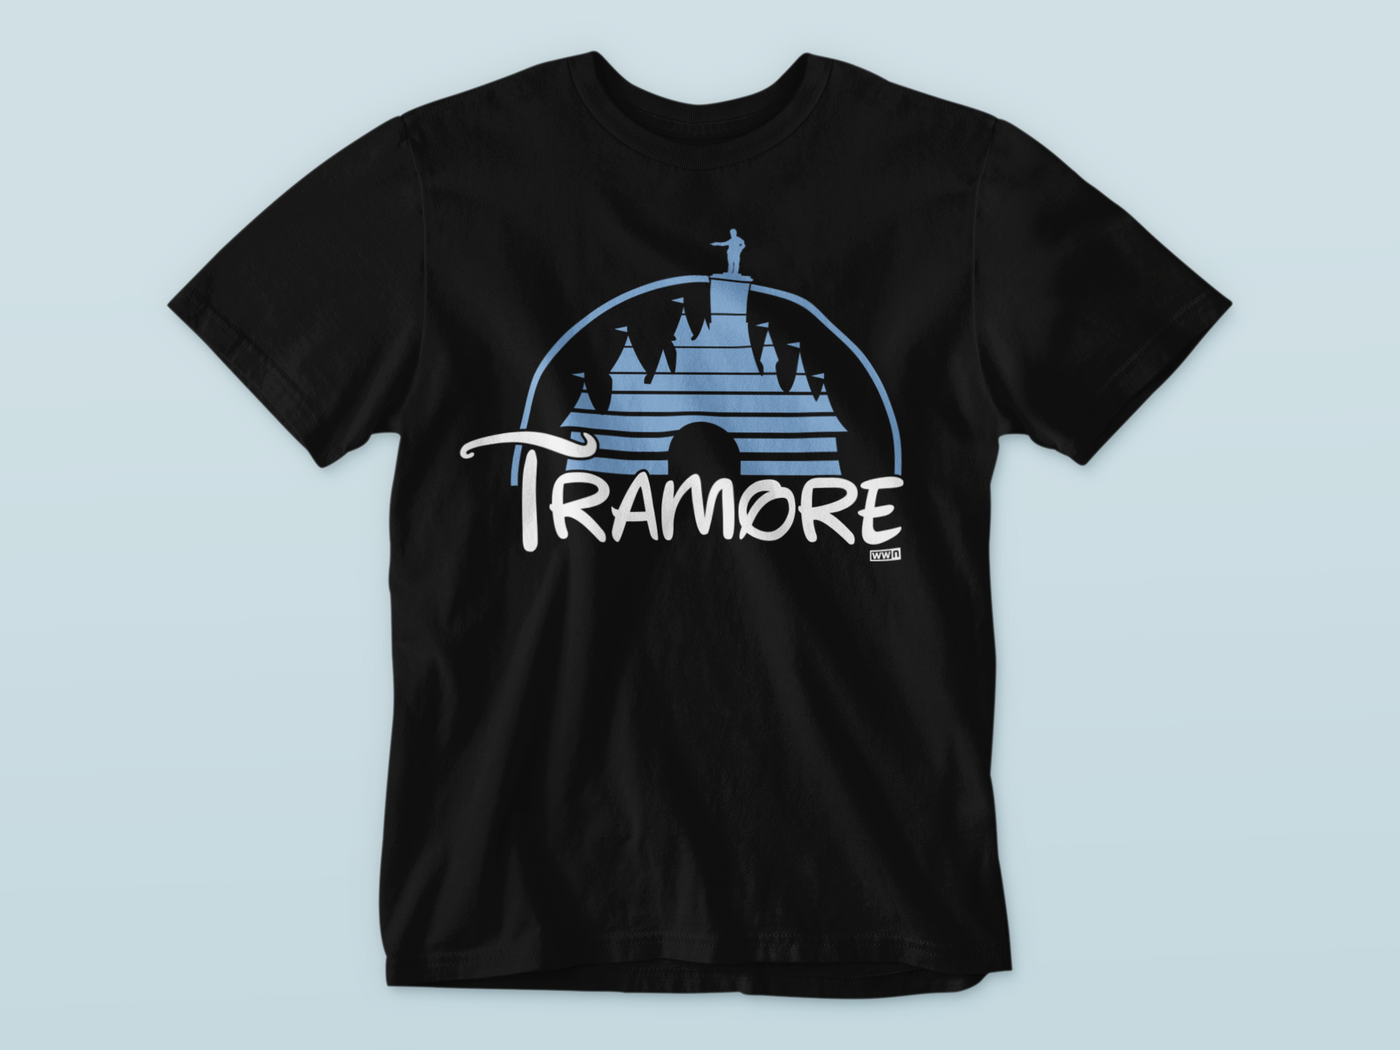 Tramore - Kids T-shirt